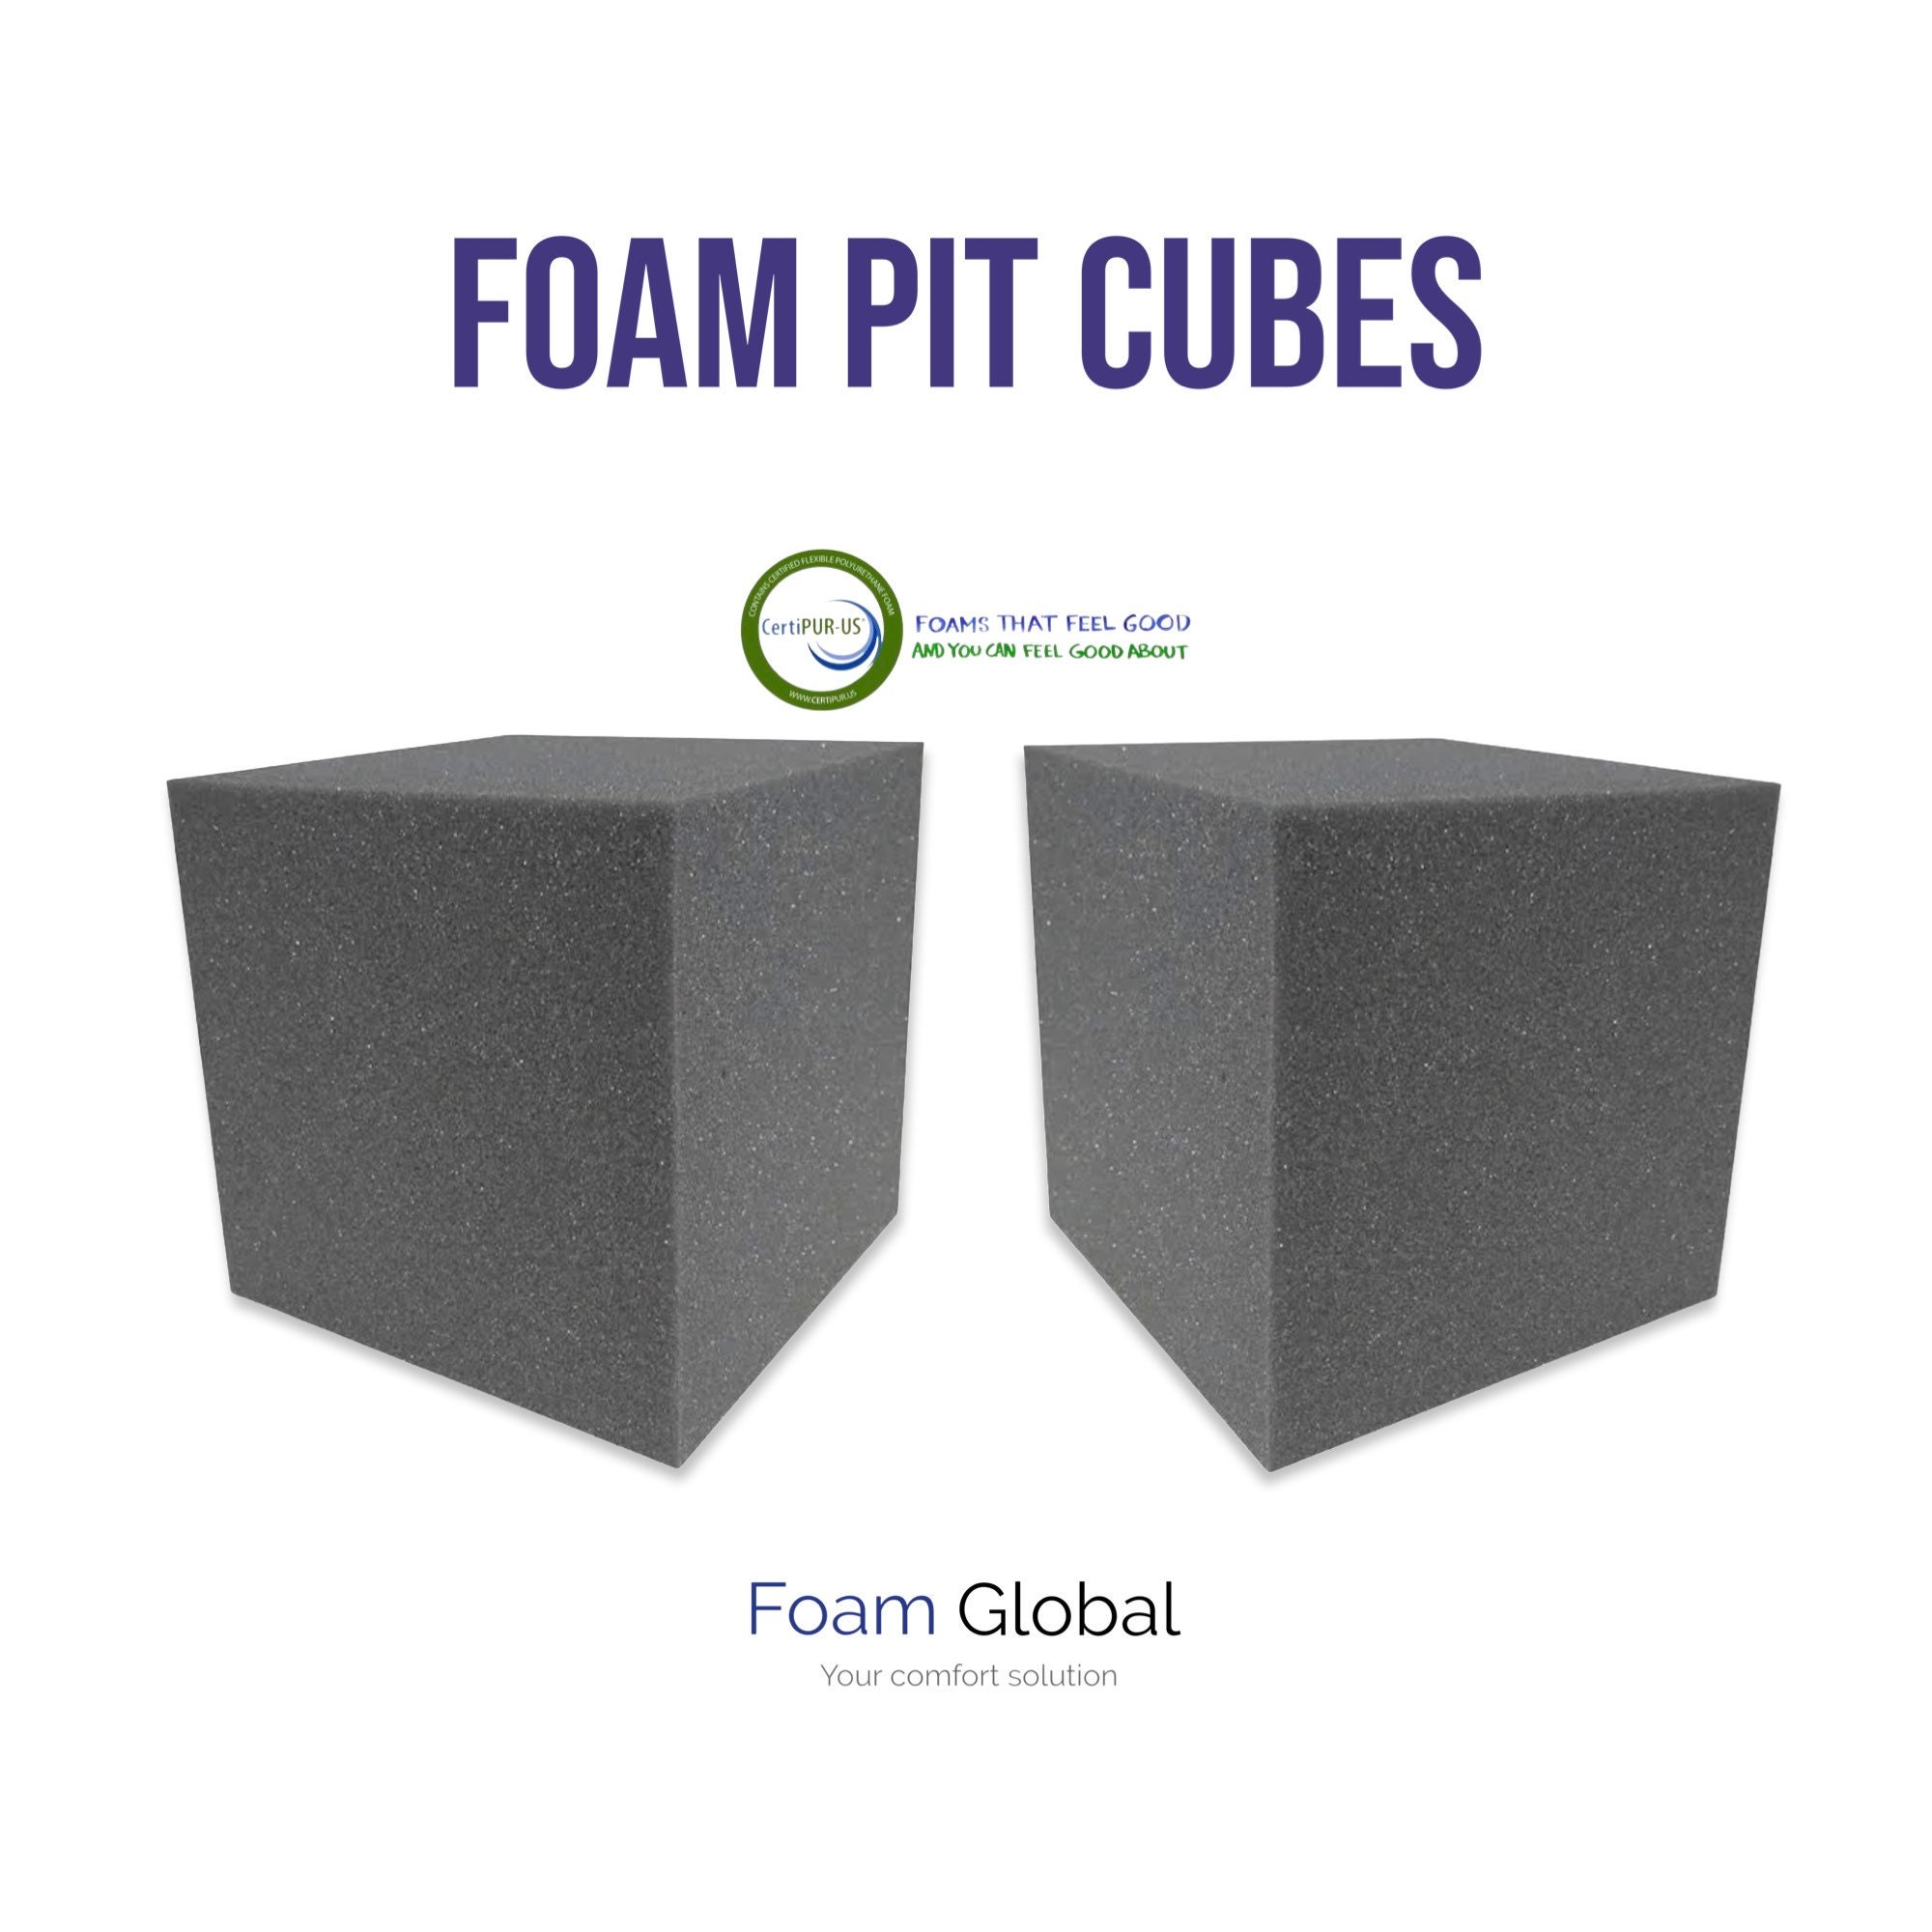 Styrofoam Cubes 10x10x10 Cm Foam EPS Cut Play Cubes Children